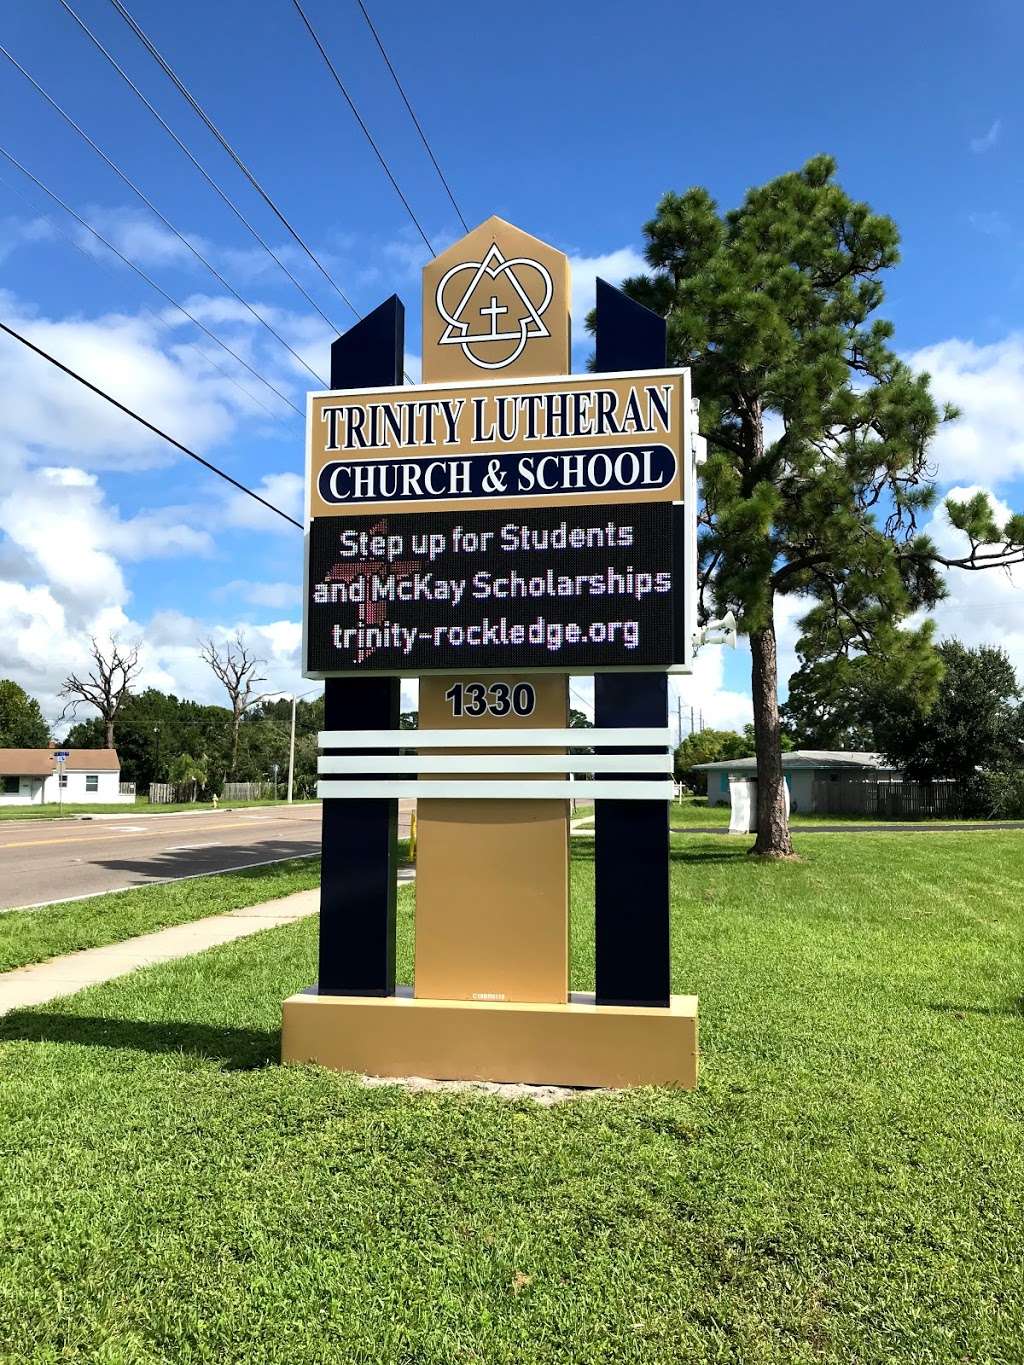 Trinity Lutheran Church & School | Photo 1 of 2 | Address: 1330 S Fiske Blvd, Rockledge, FL 32955, USA | Phone: (321) 636-5431